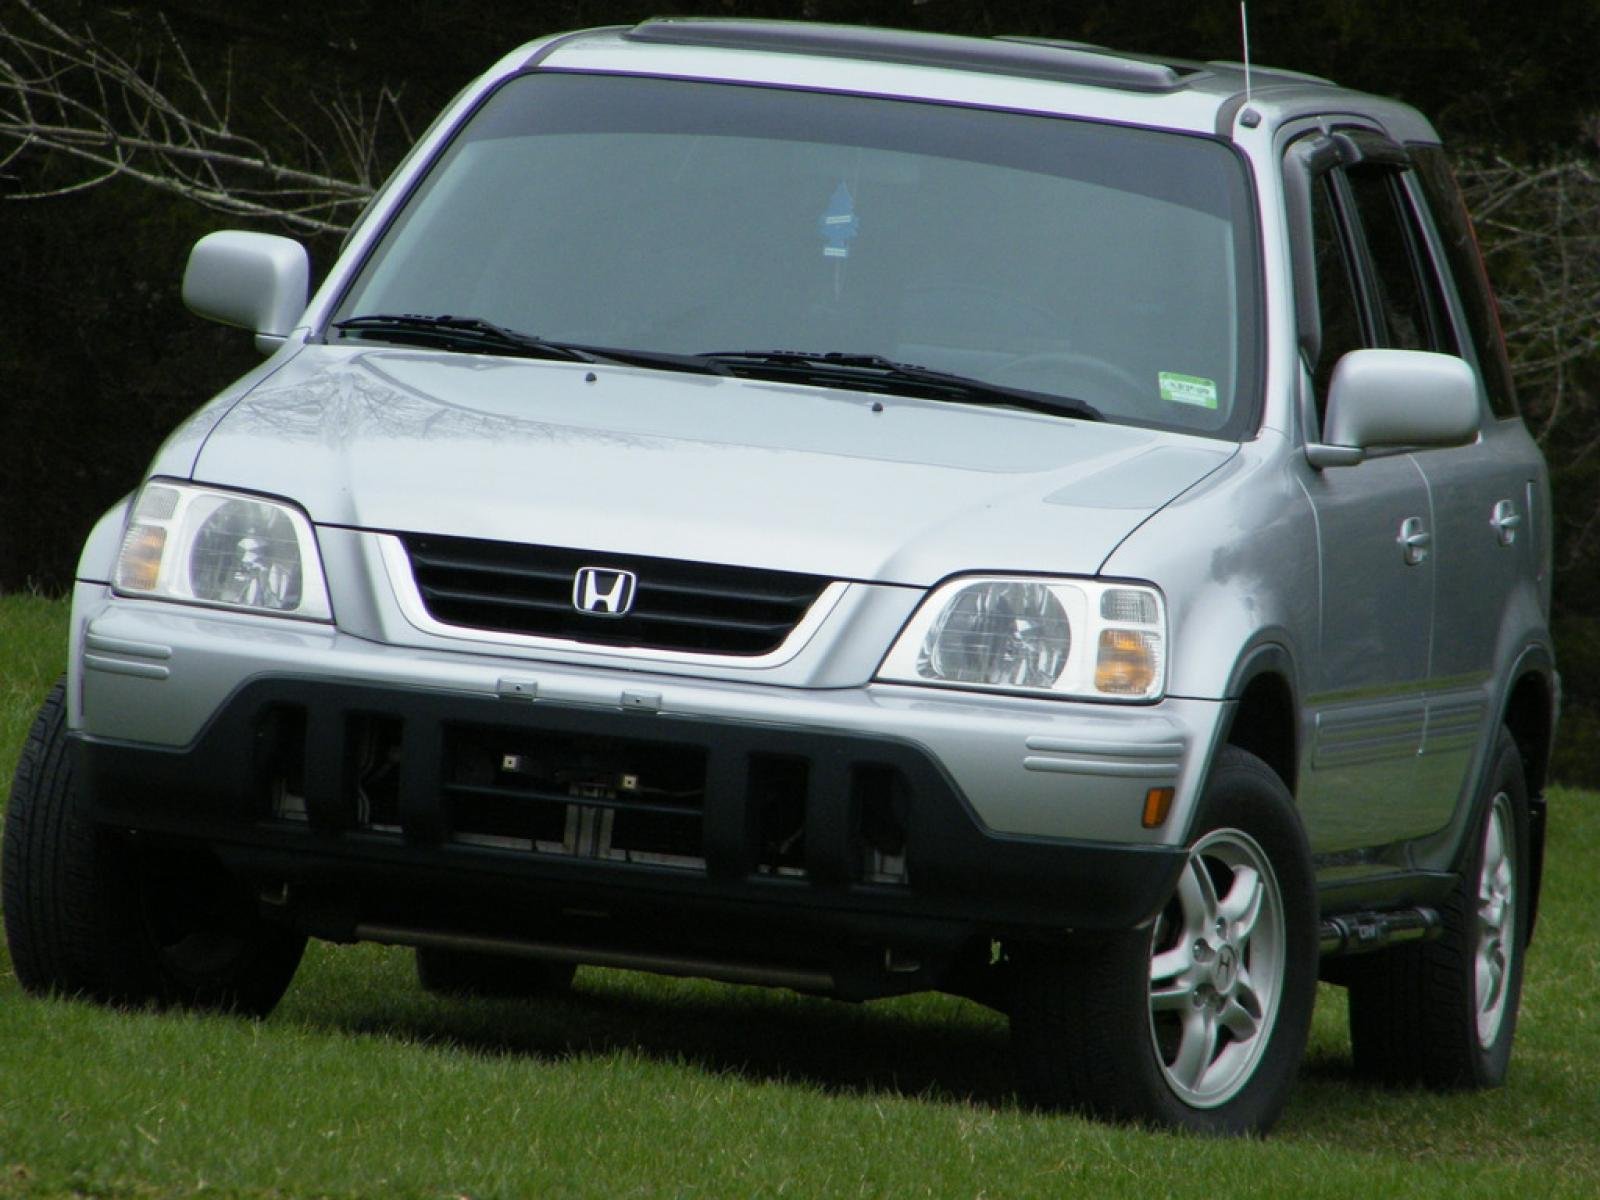 Црв 2000 года. Honda CRV 2001. Honda CR-V 2001. Honda CR-V 1 2001. Honda CRV 2001 года.